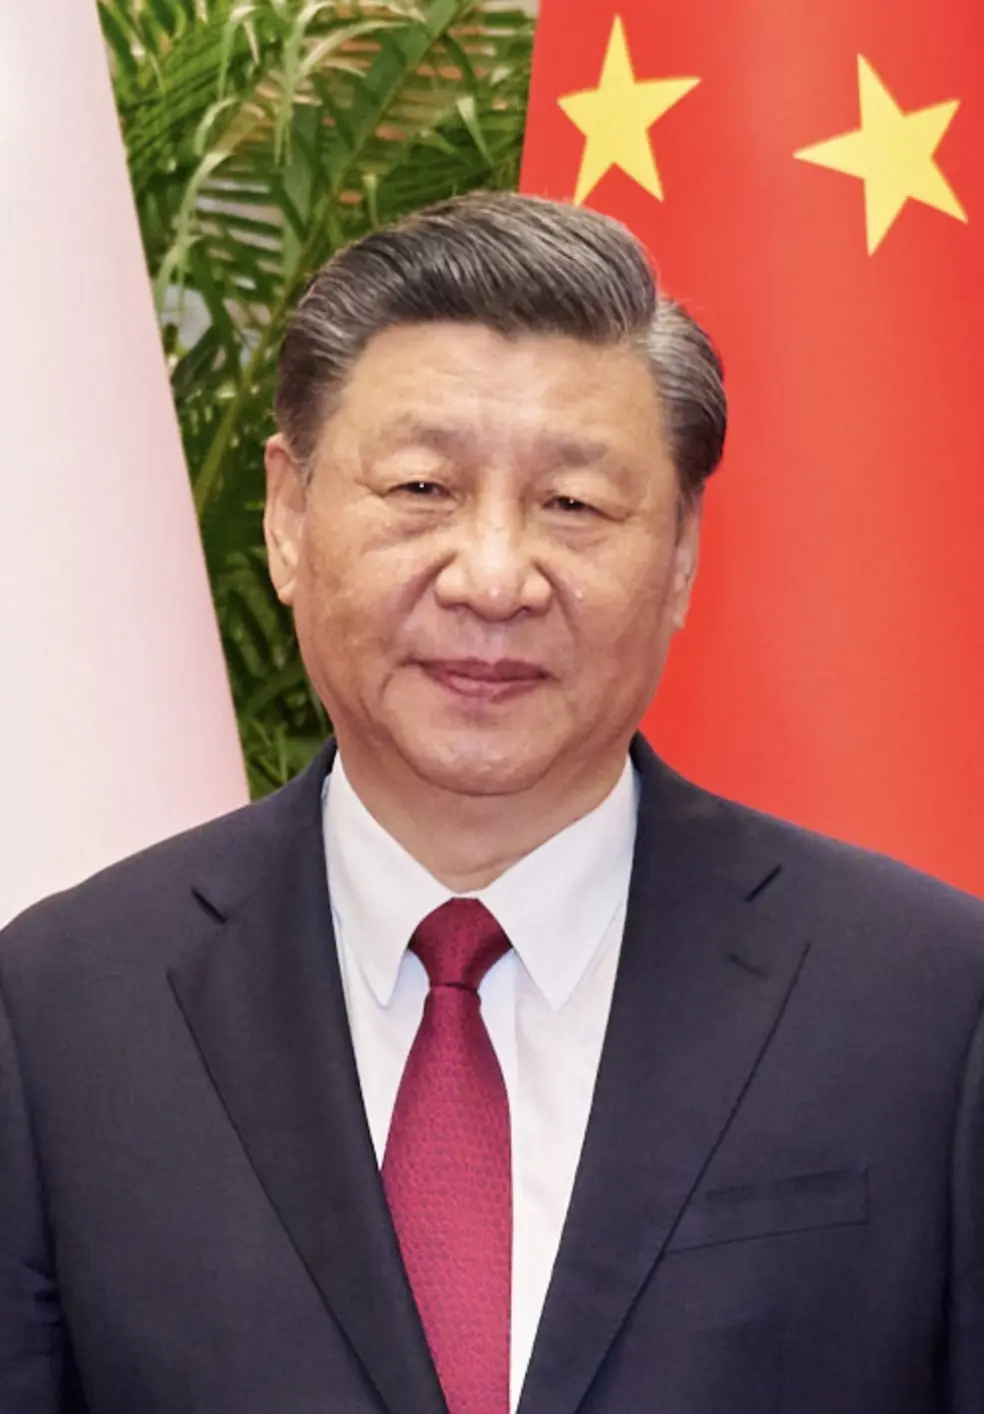 deng xiaoping inteligencia - Que estudió Xi Jinping